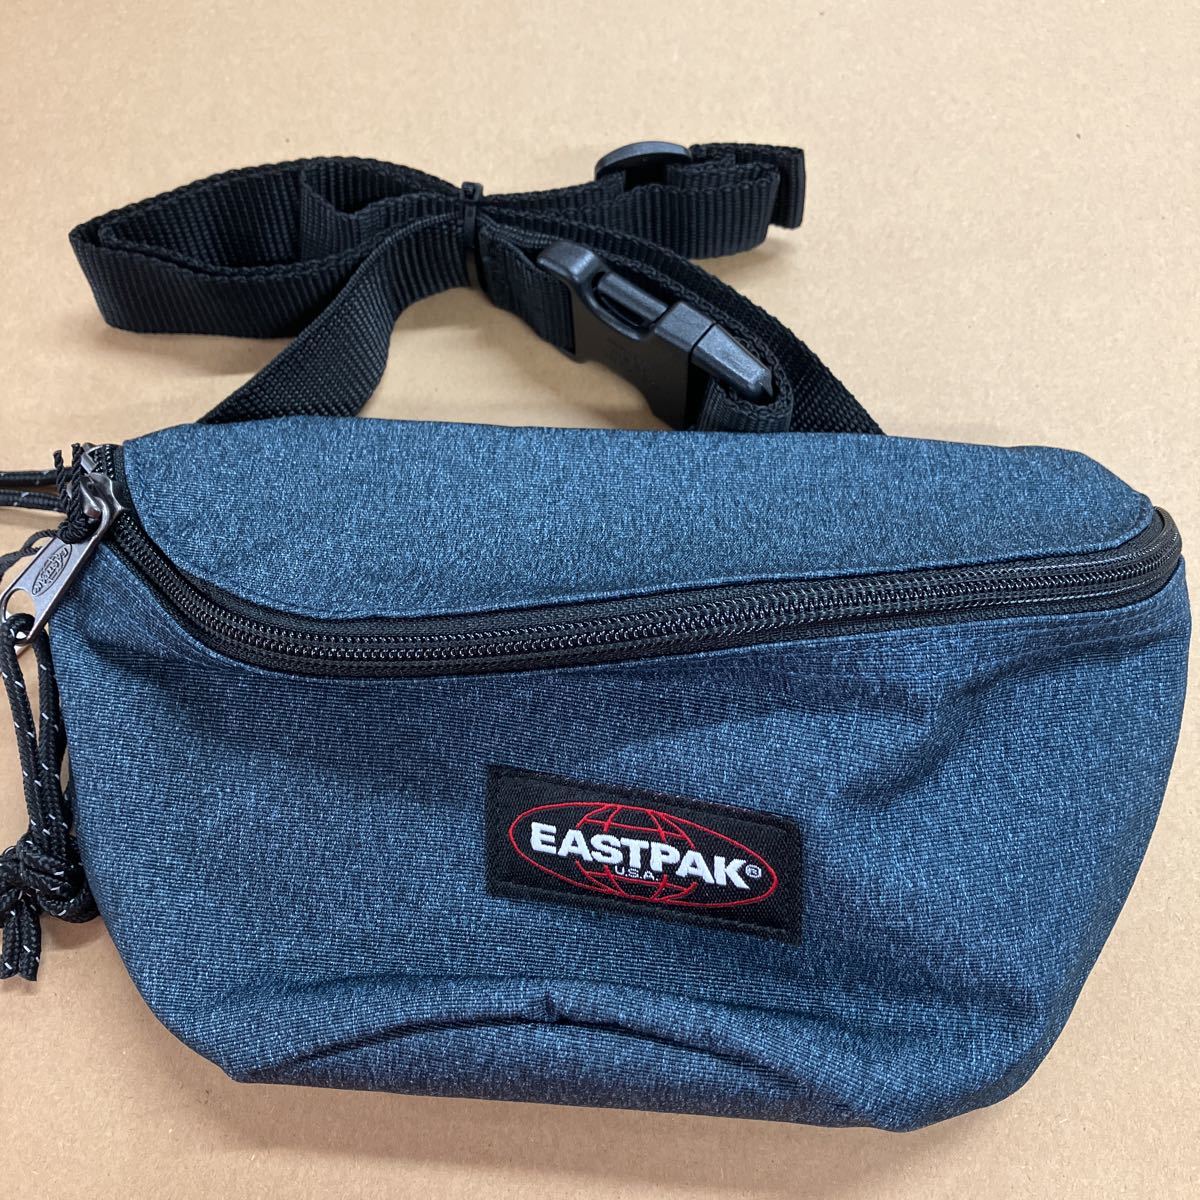 EASTPAK SPRINGER East упаковка Springer поясная сумка плечо BAG сумка задний сумка не использовался 